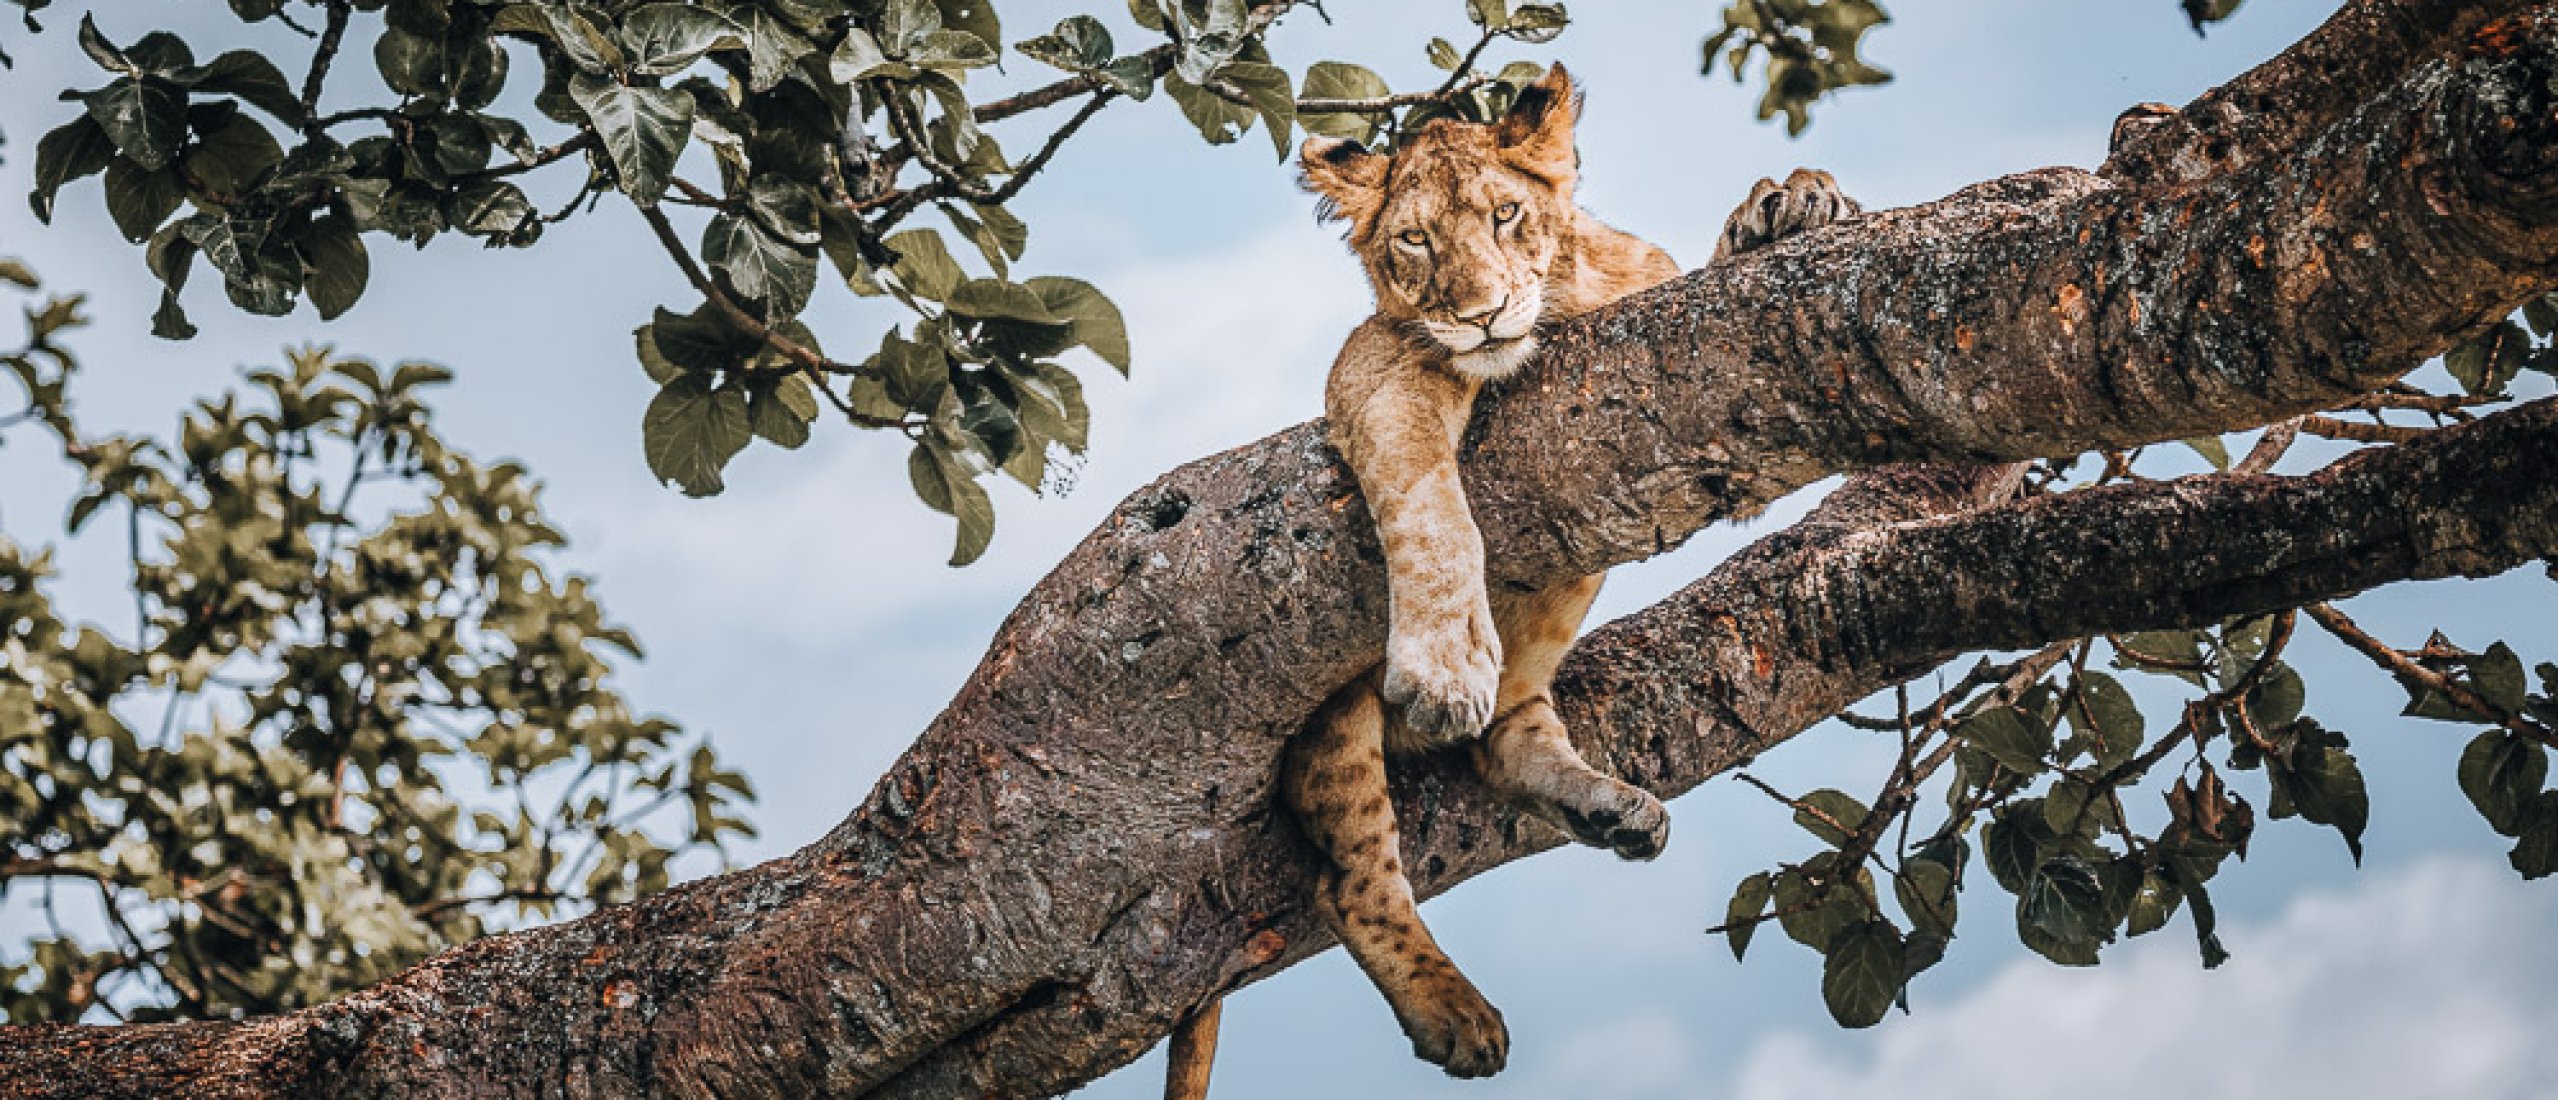 Tree-climbing lion in Queen Elizabeth National Park Uganda